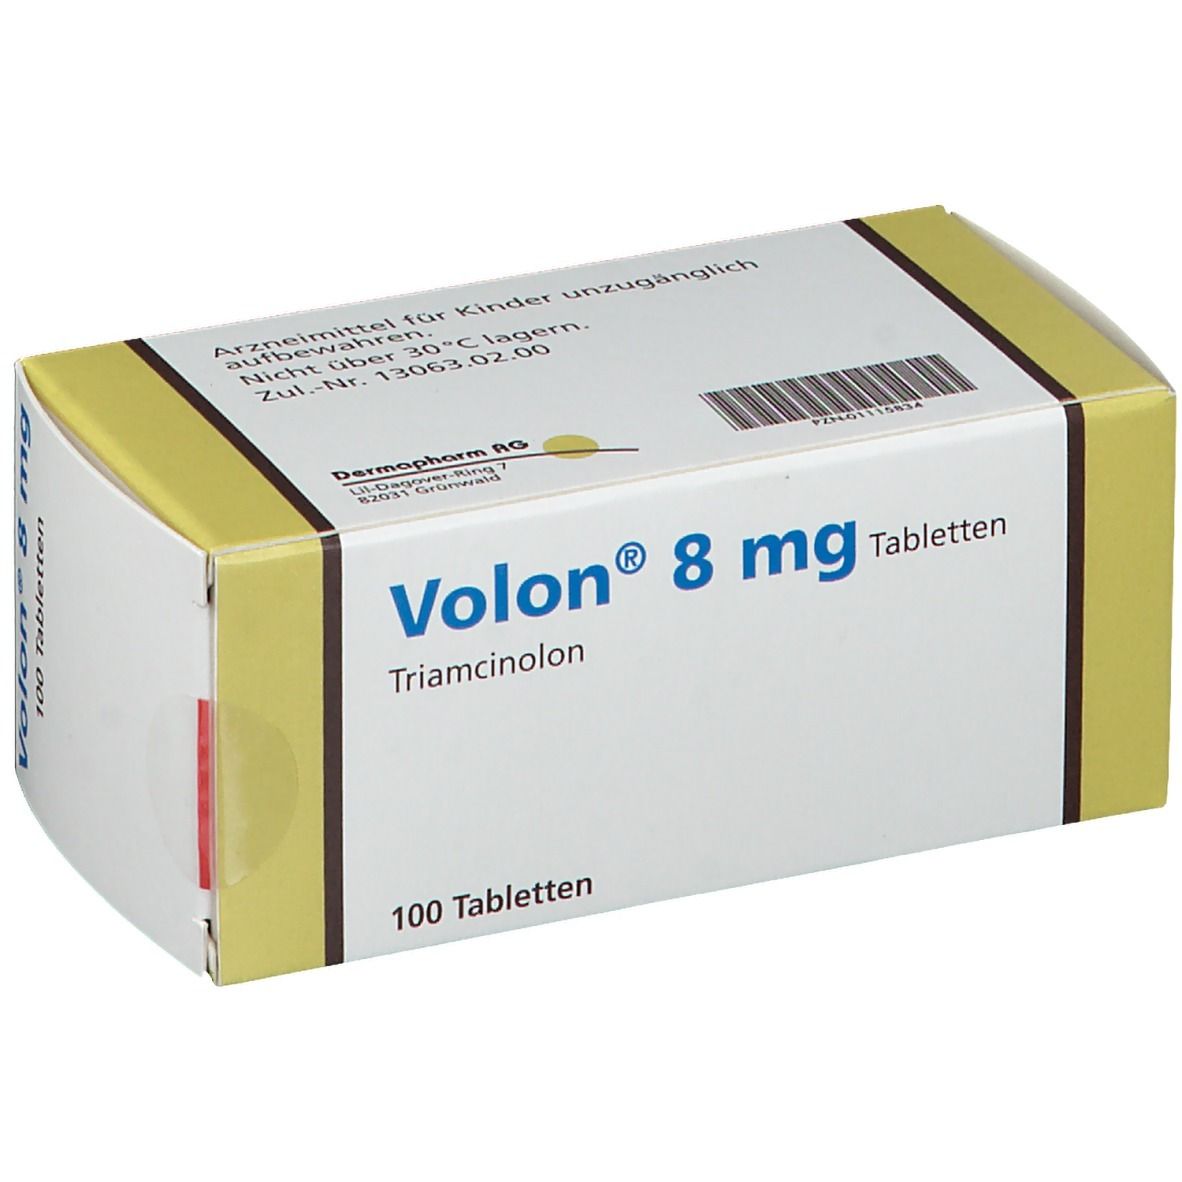 Volon®8 mg